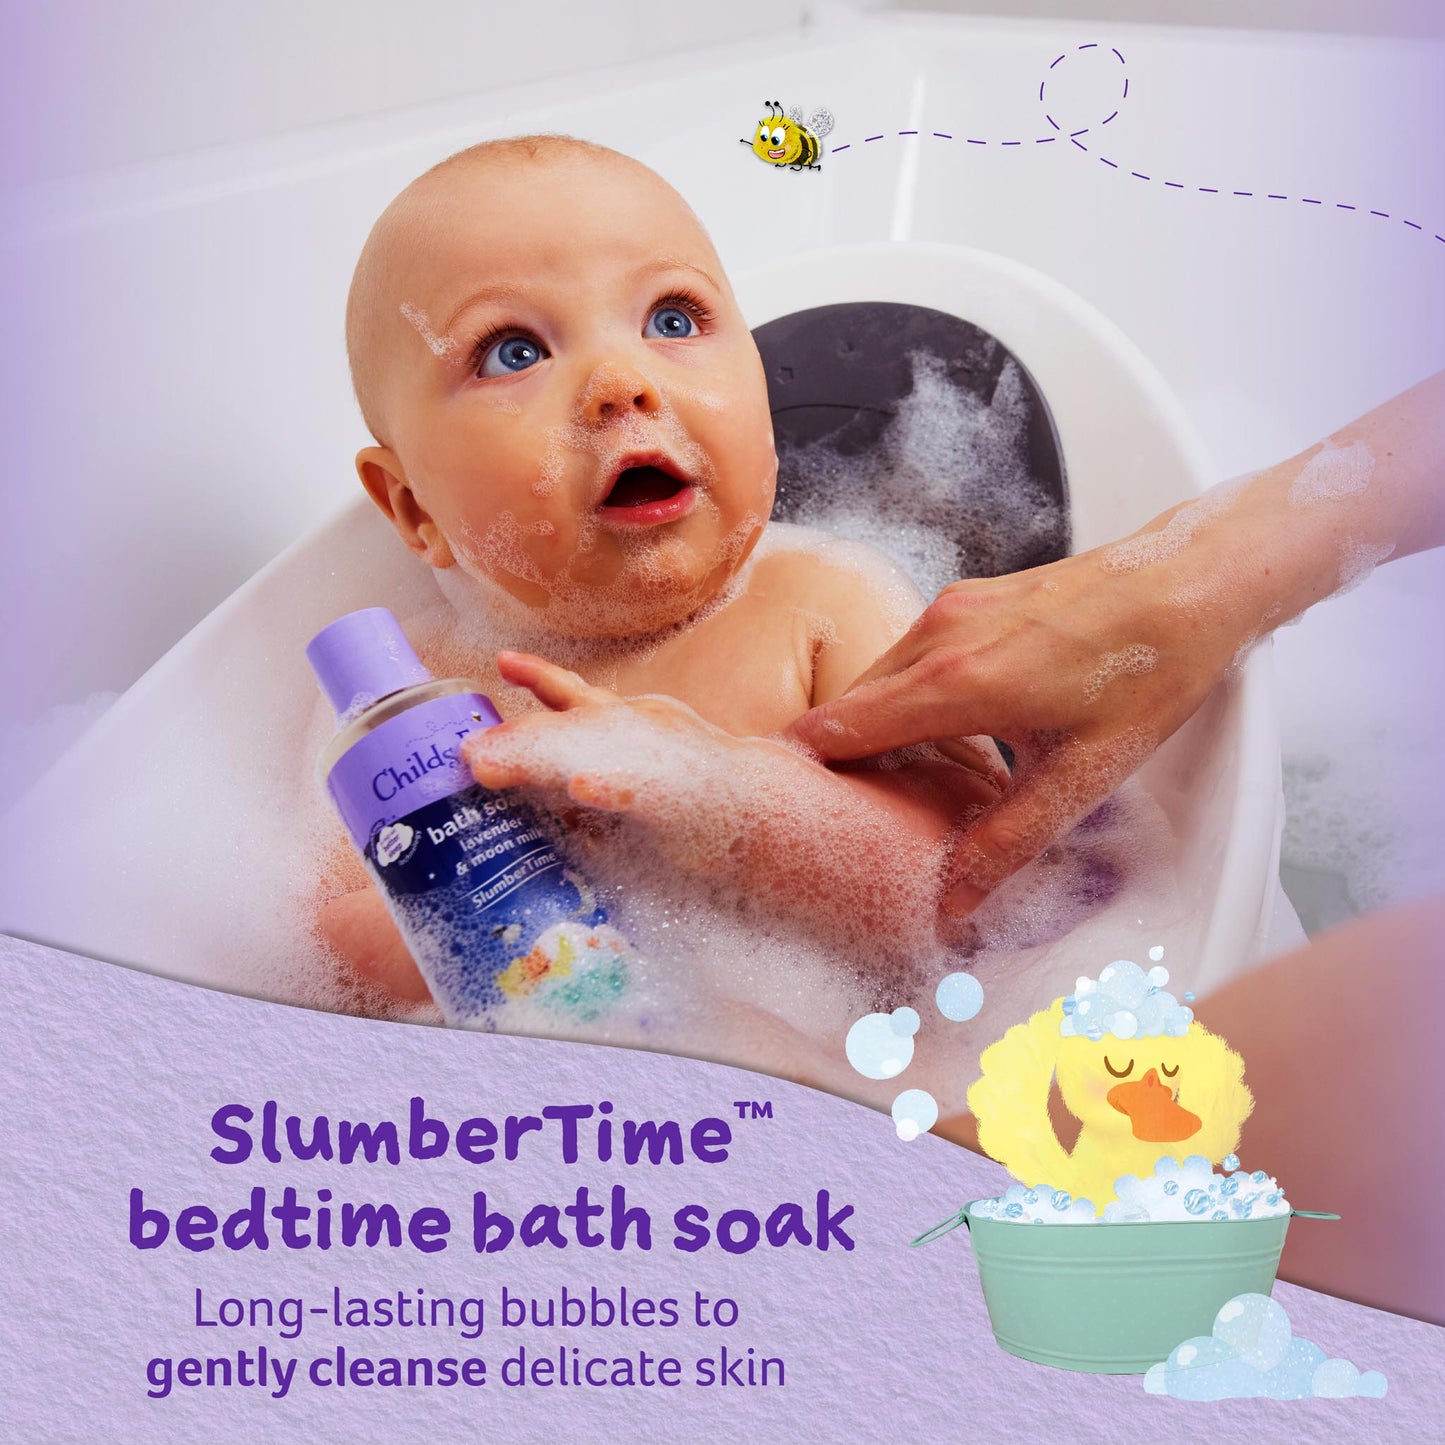 Childs Farm SlumberTime™ bath soak lavender & moon-milk